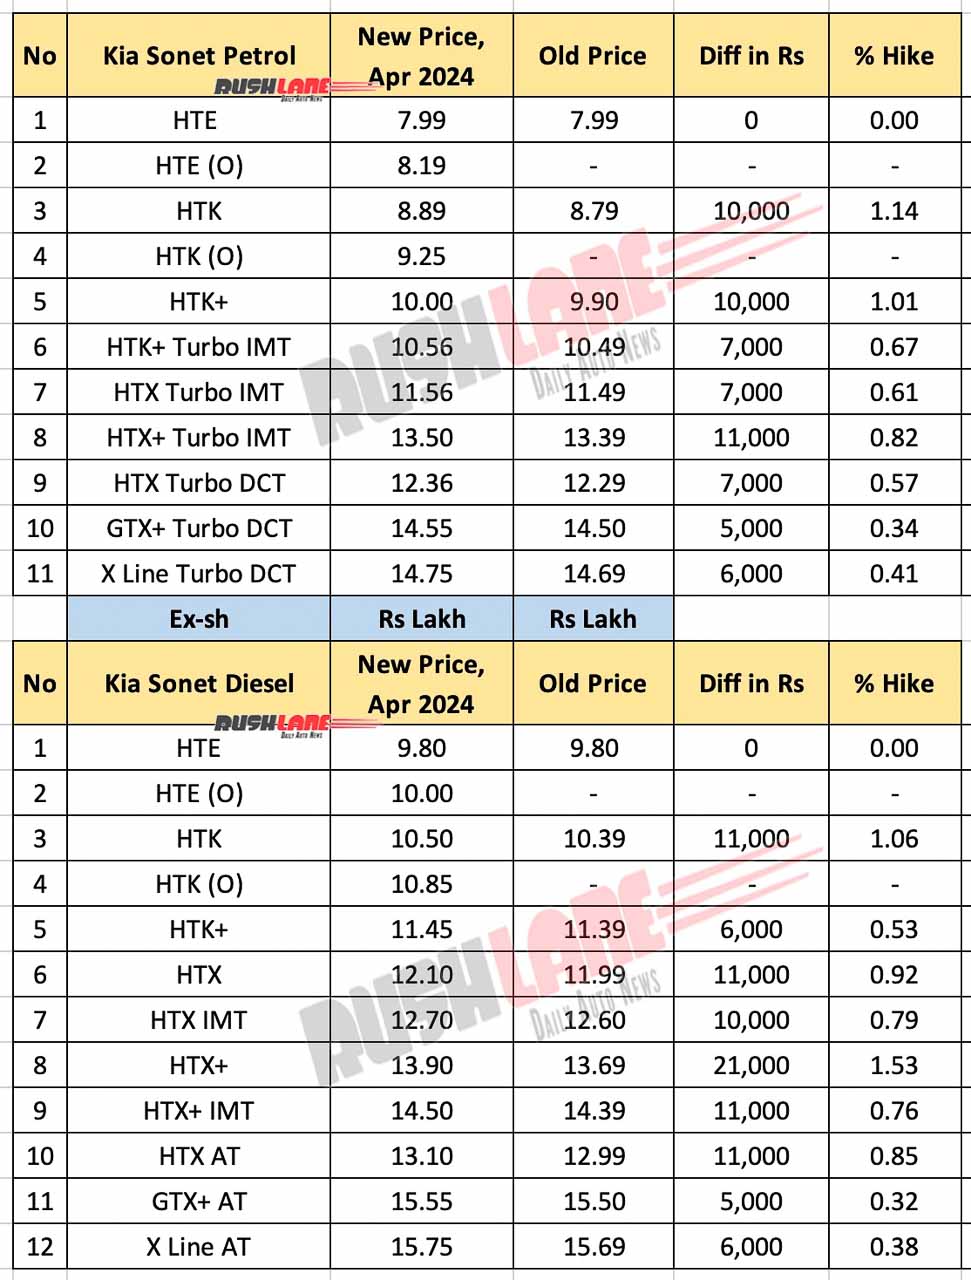 New Kia Sonet Prices - April 2024 - All 23 Variants